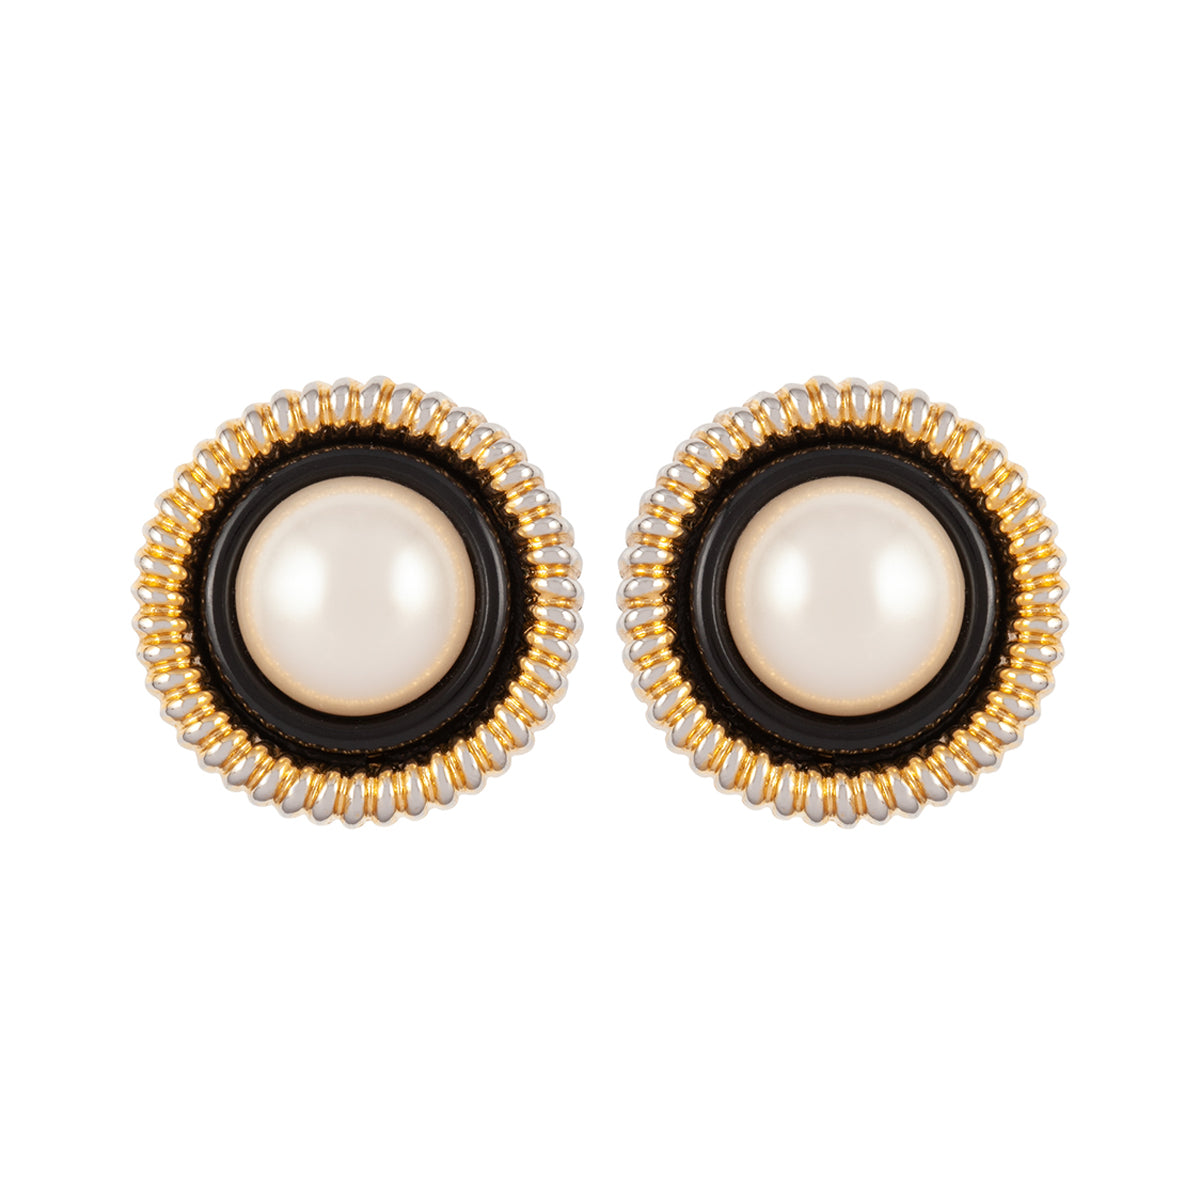 1960s Vintage Chanel Faux Pearl Clip-On Earrings